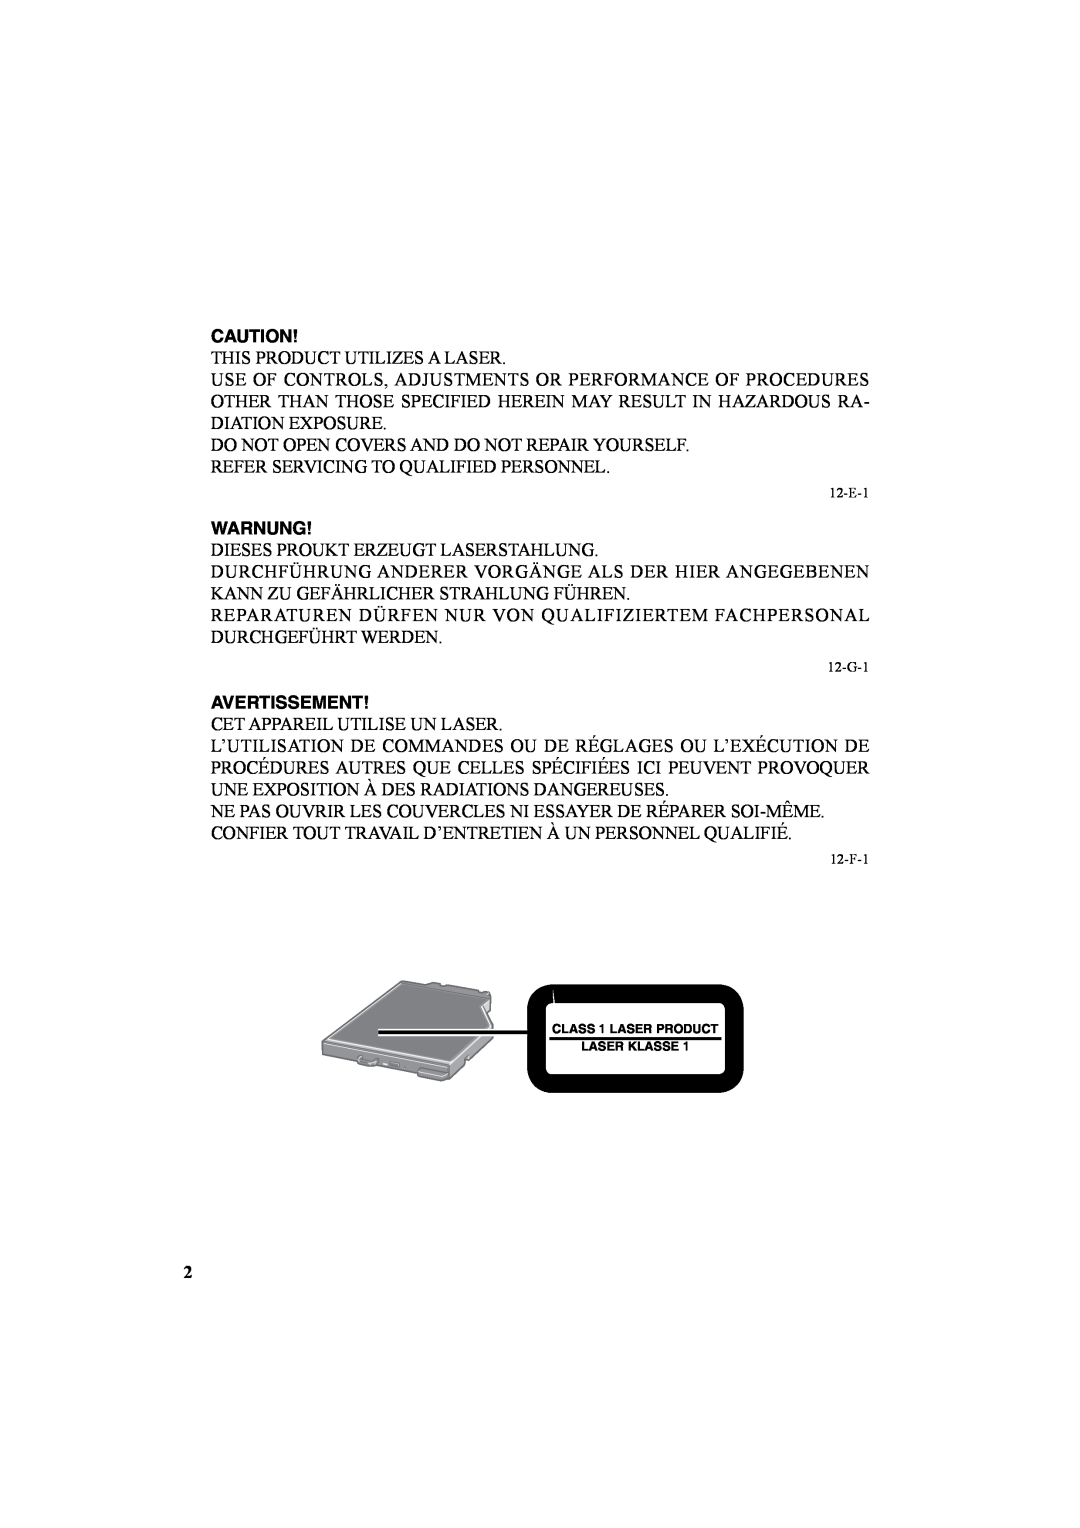 Panasonic CF-VDR301U specifications Warnung, Avertissement 